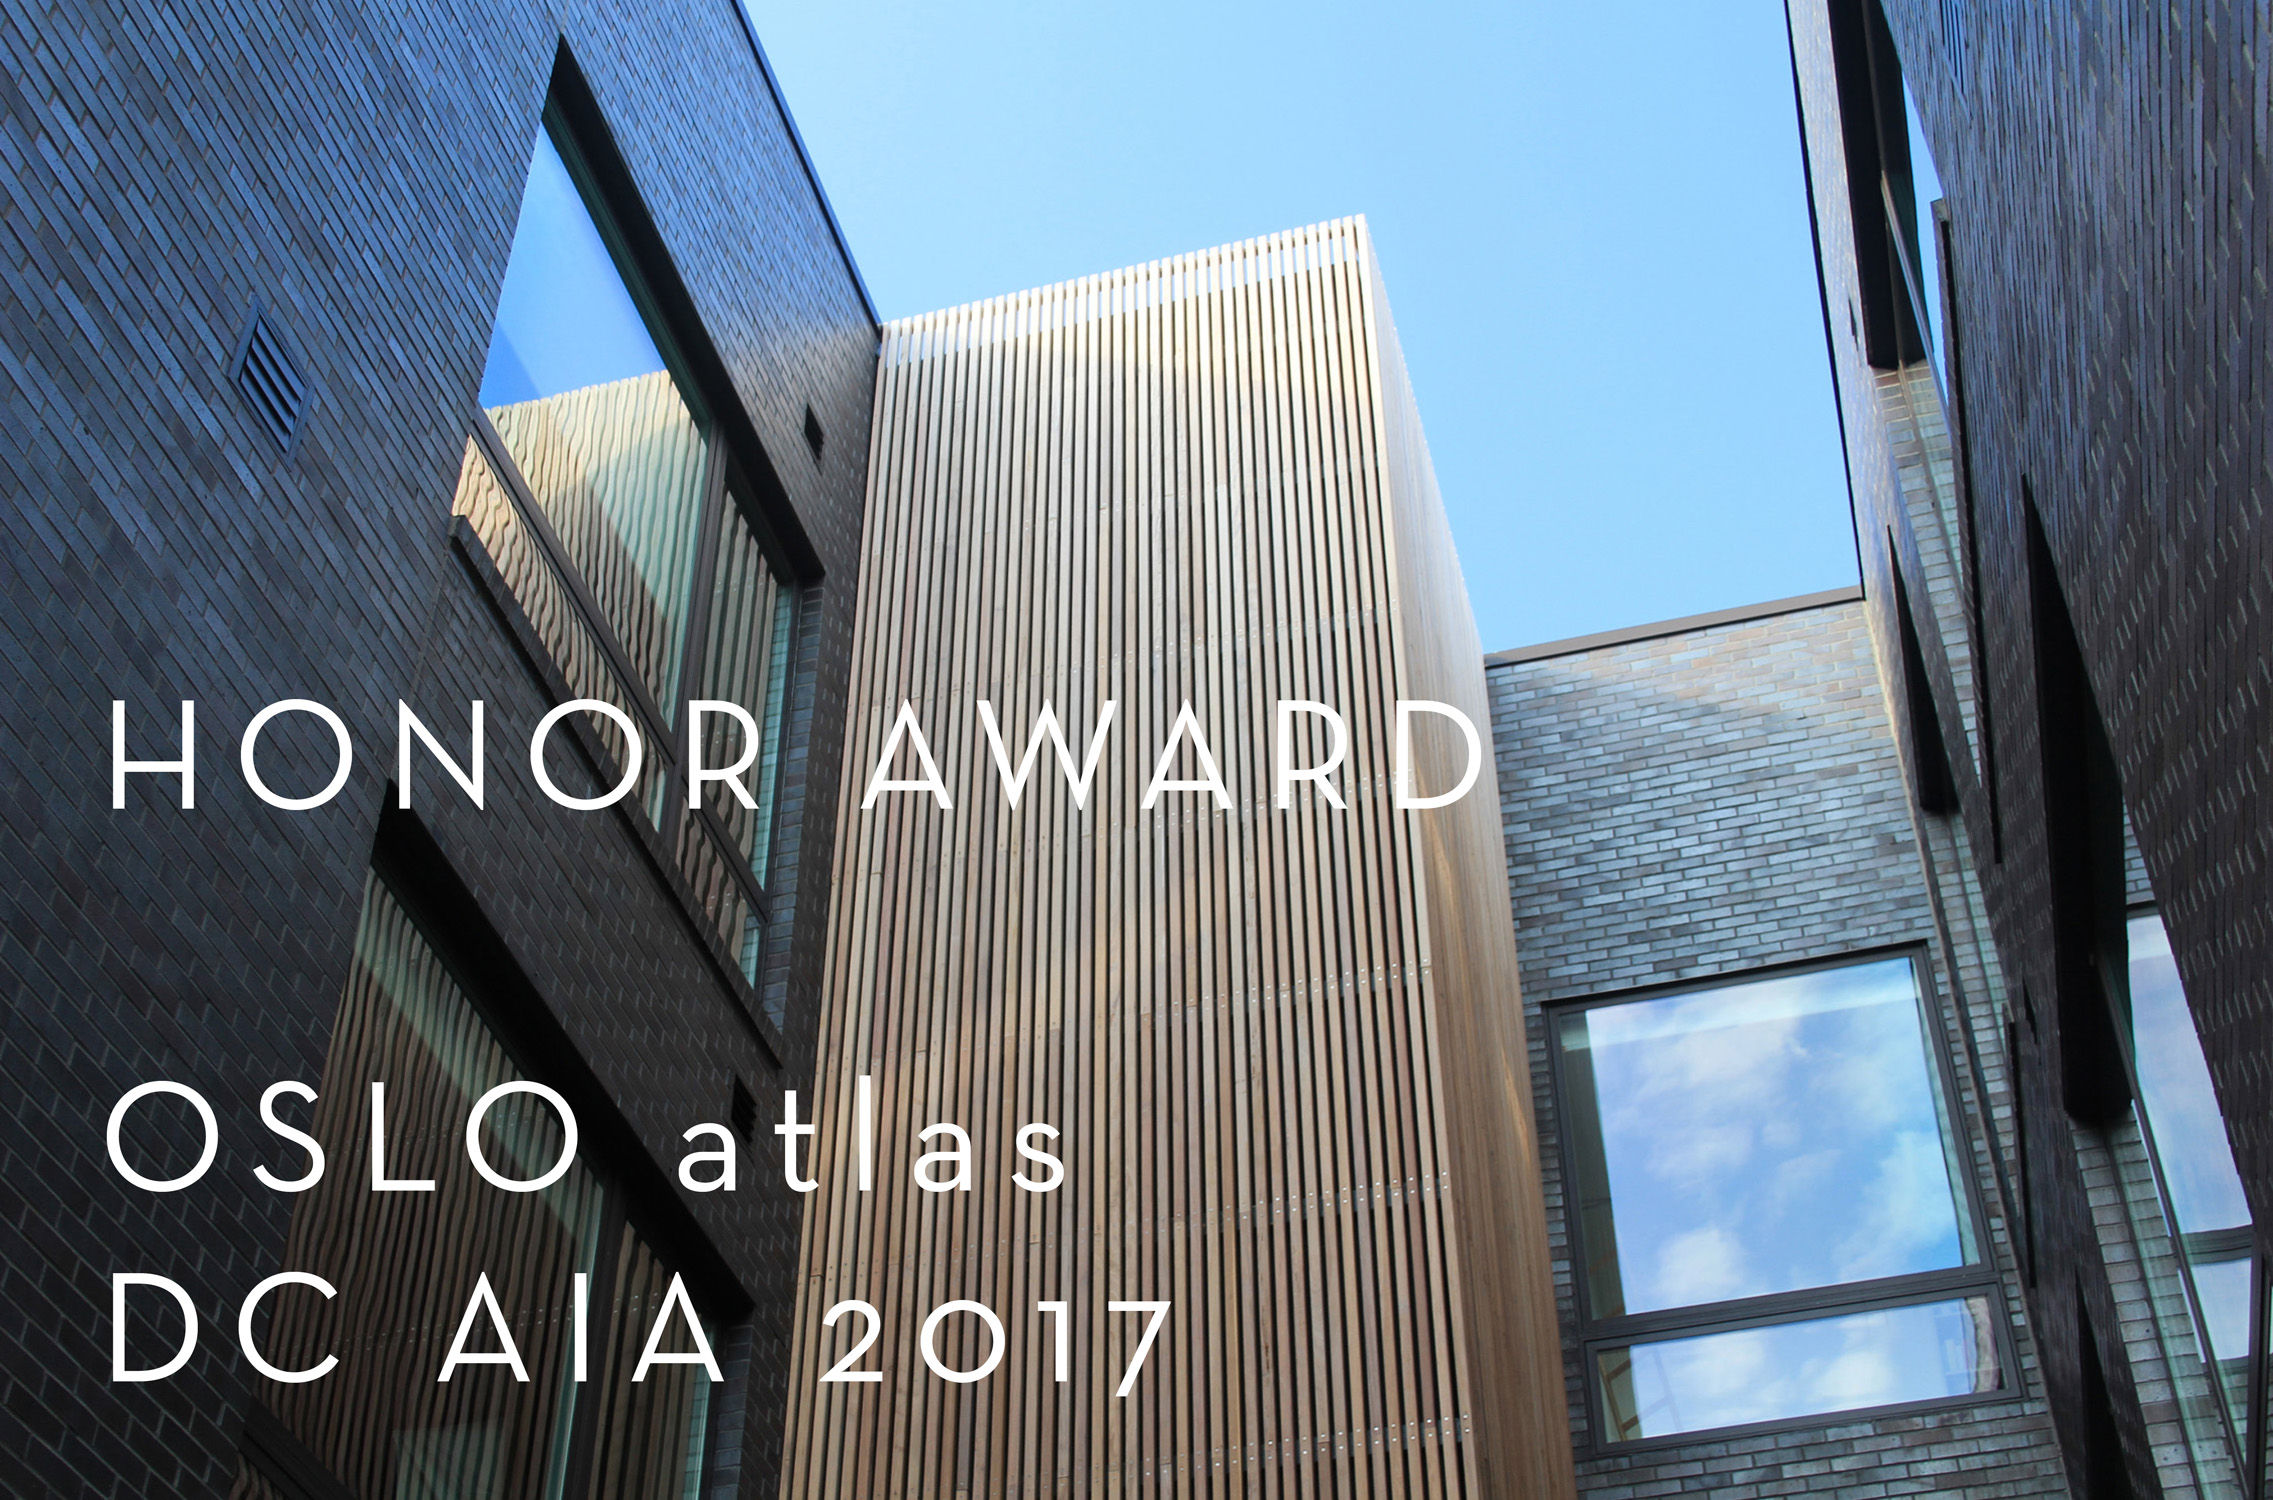 Honor Award, OSLO atlas DC AIA 2017 (Copy)